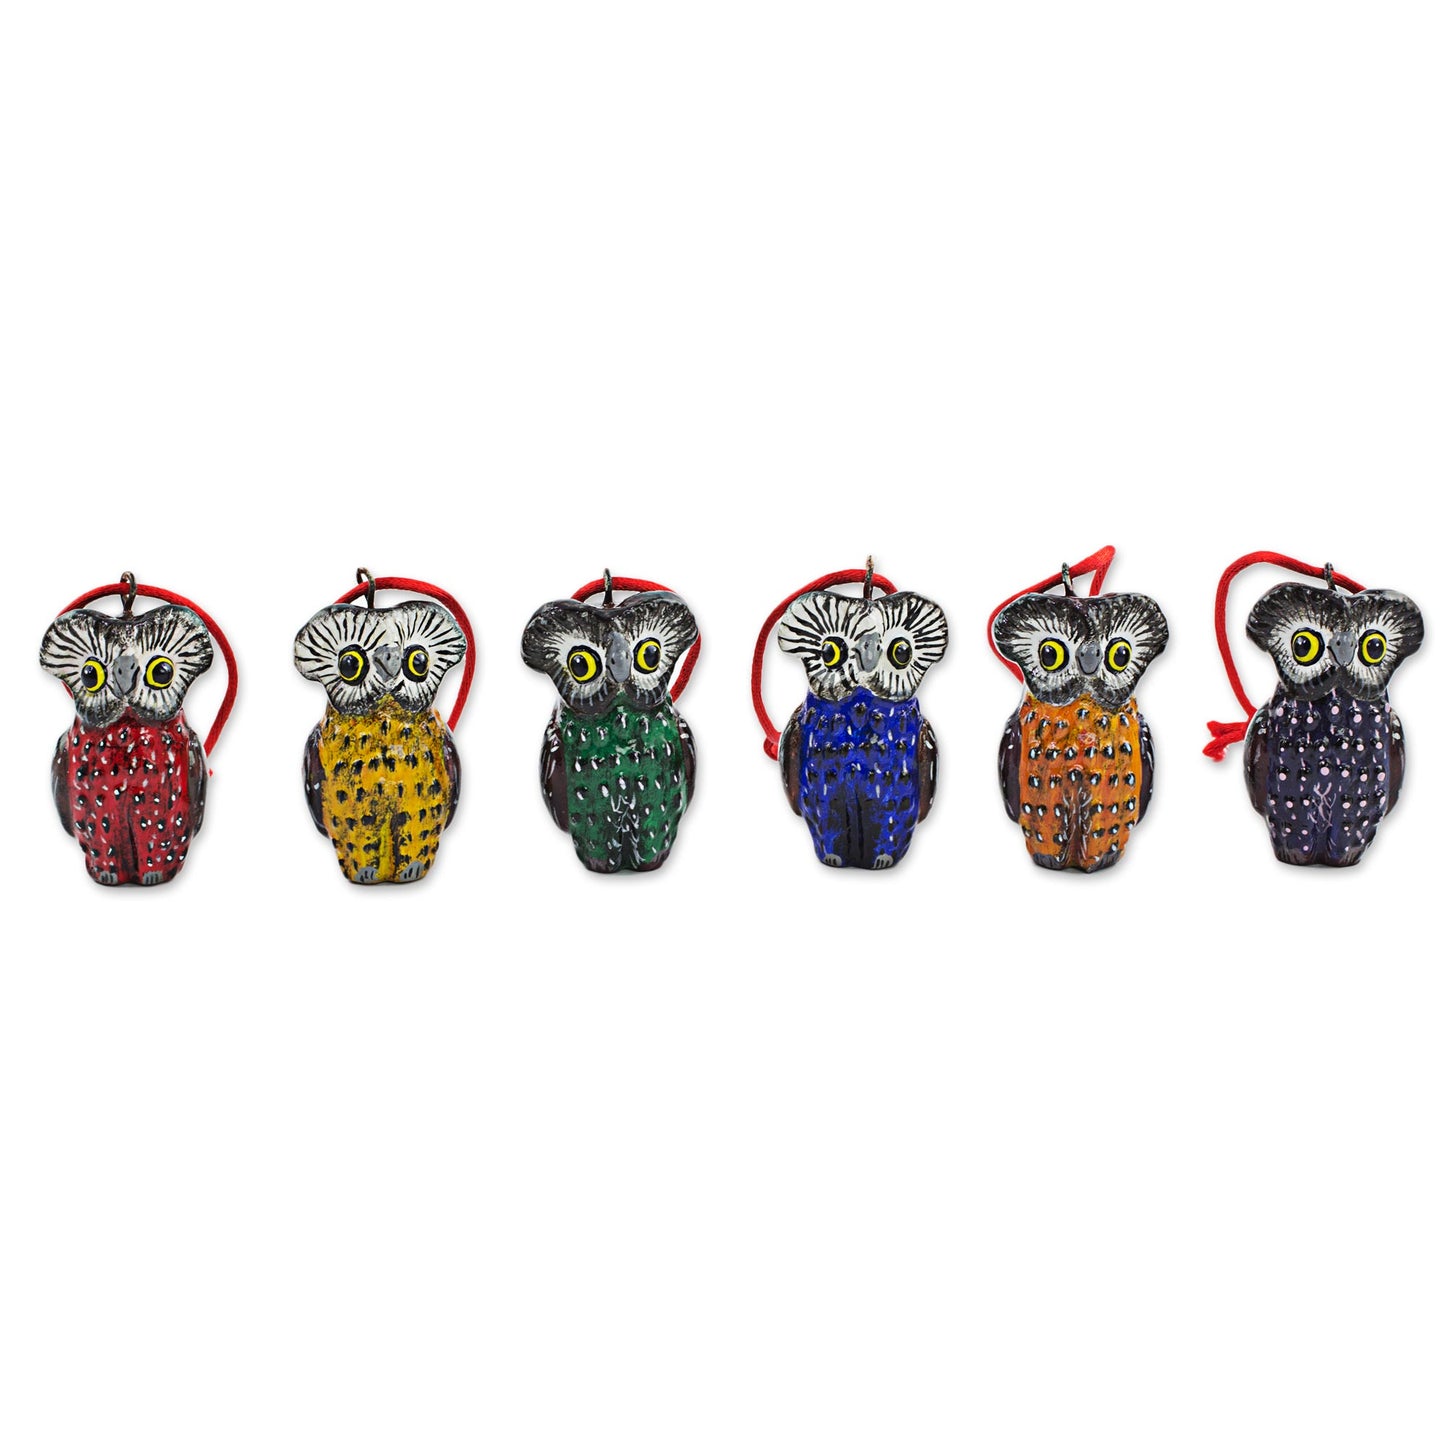 Owls of Tikal Handcrafted Ceramic Bird Ornaments (Set of 6 Owls)